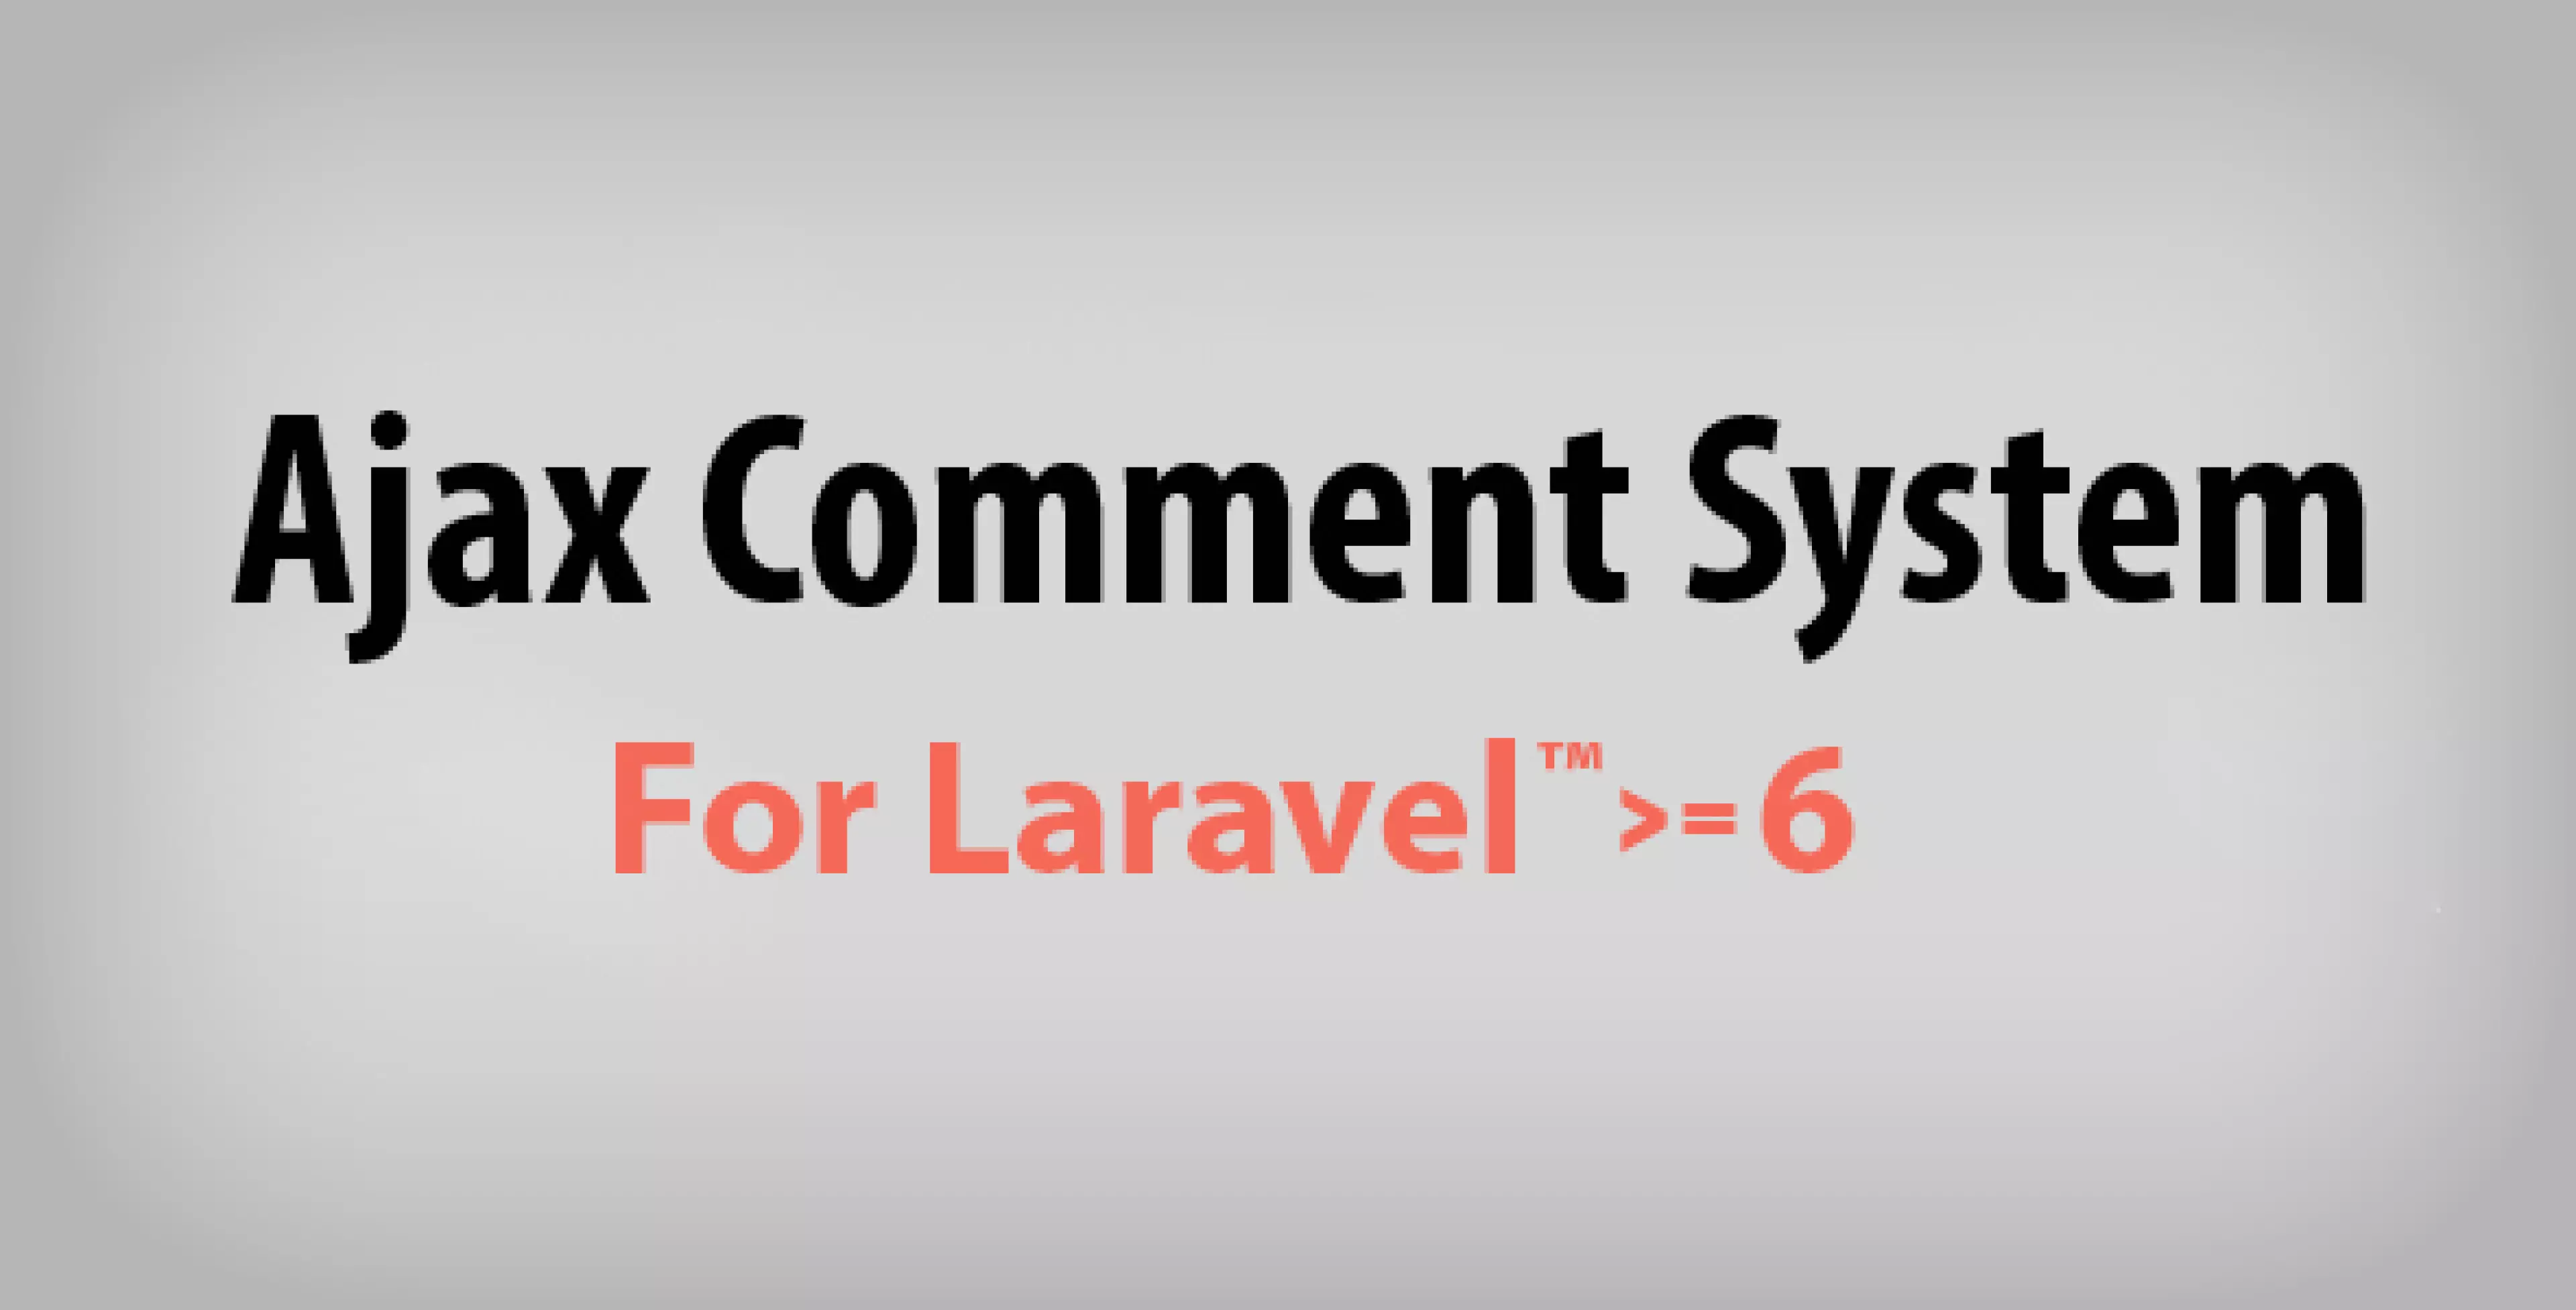 Ajax Comment System for Laravel